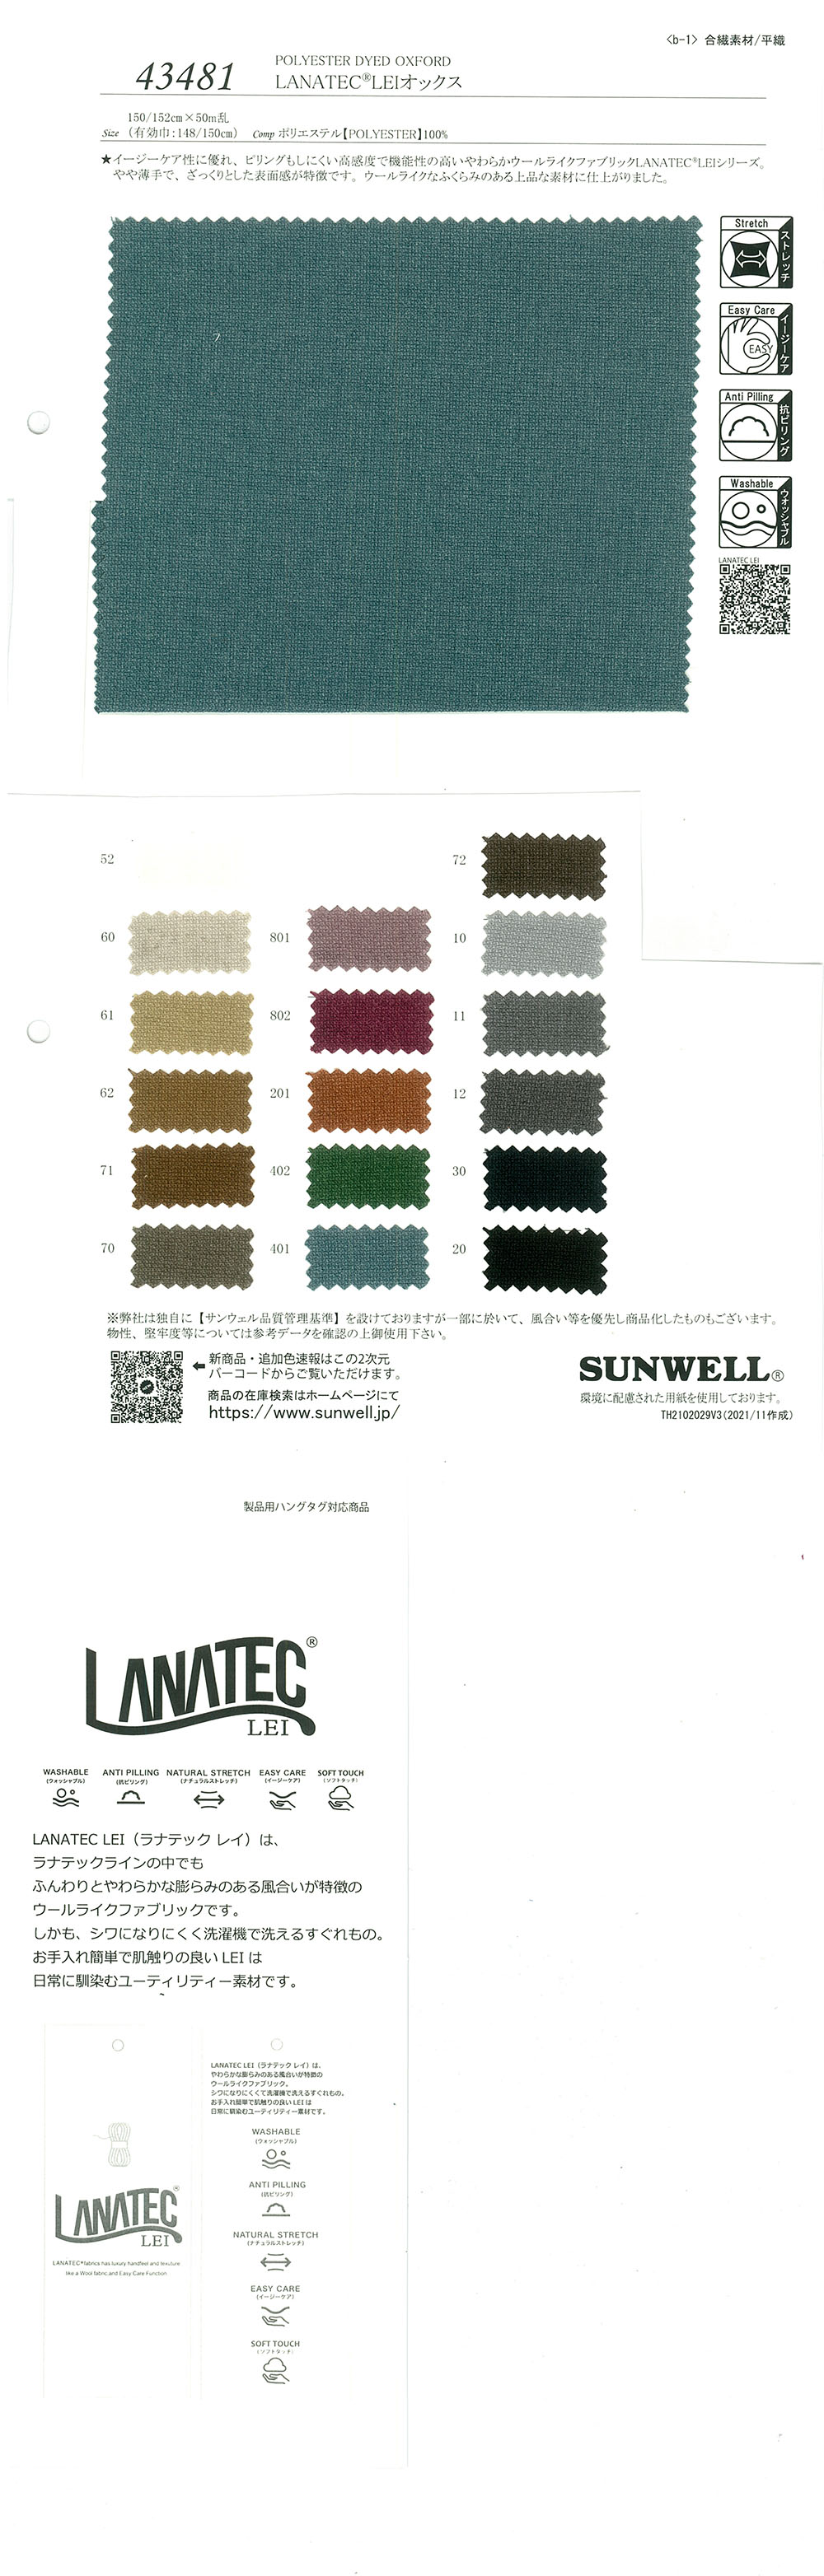 43481 LANATEC(R) LEI Oxford[Fabrication De Textile] SUNWELL